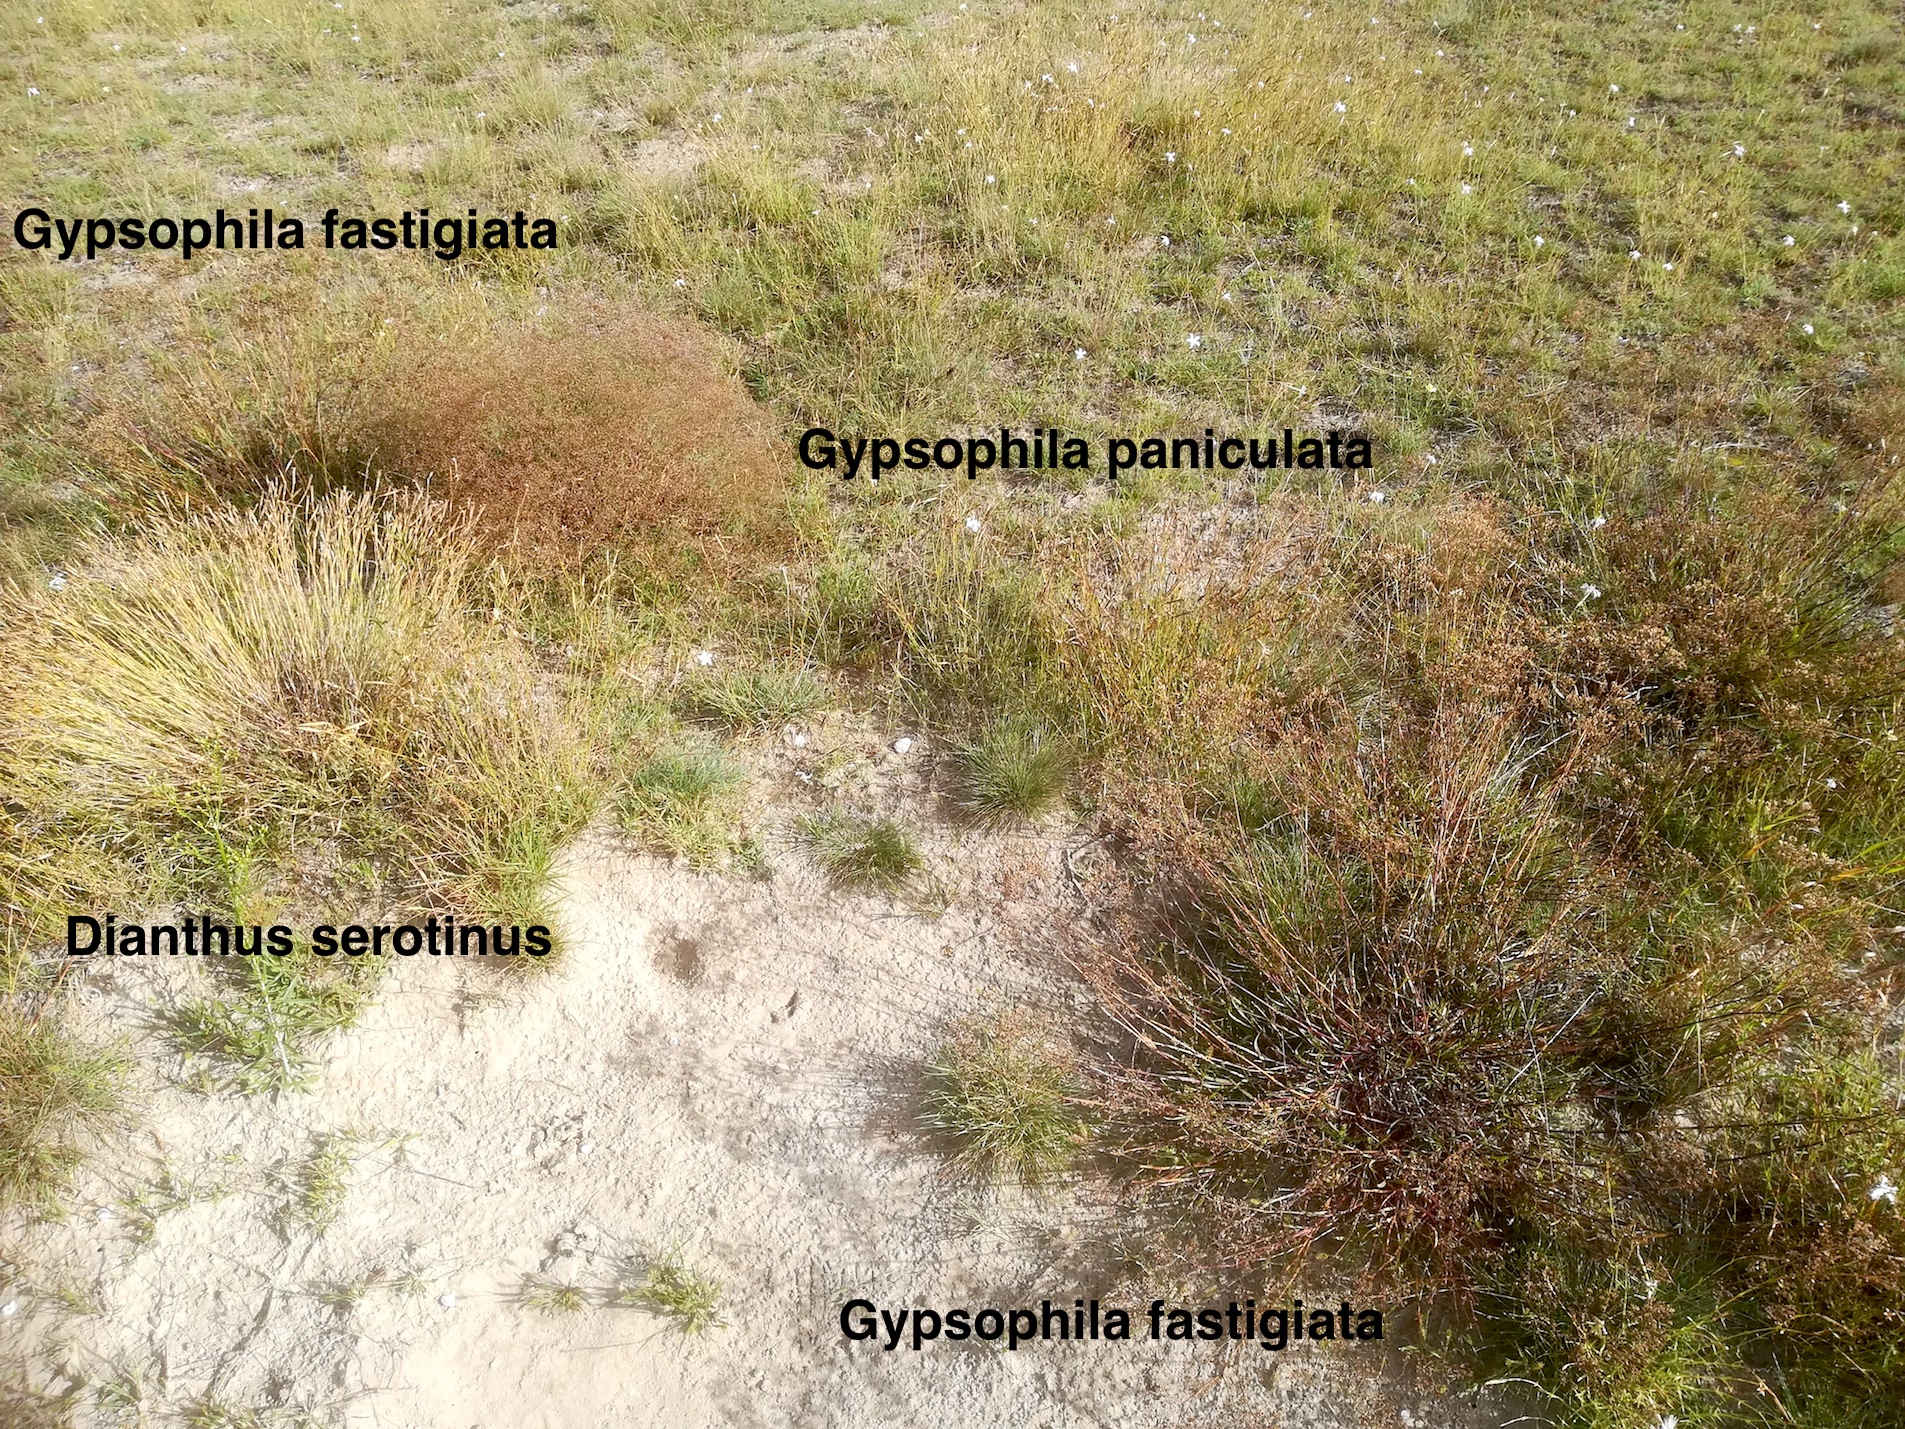 gypsophila paniculata und gypsophila fastigiata syntop pionierstandort bei tierbau NSG windmühle bei lassee_20200824_091625.jpg